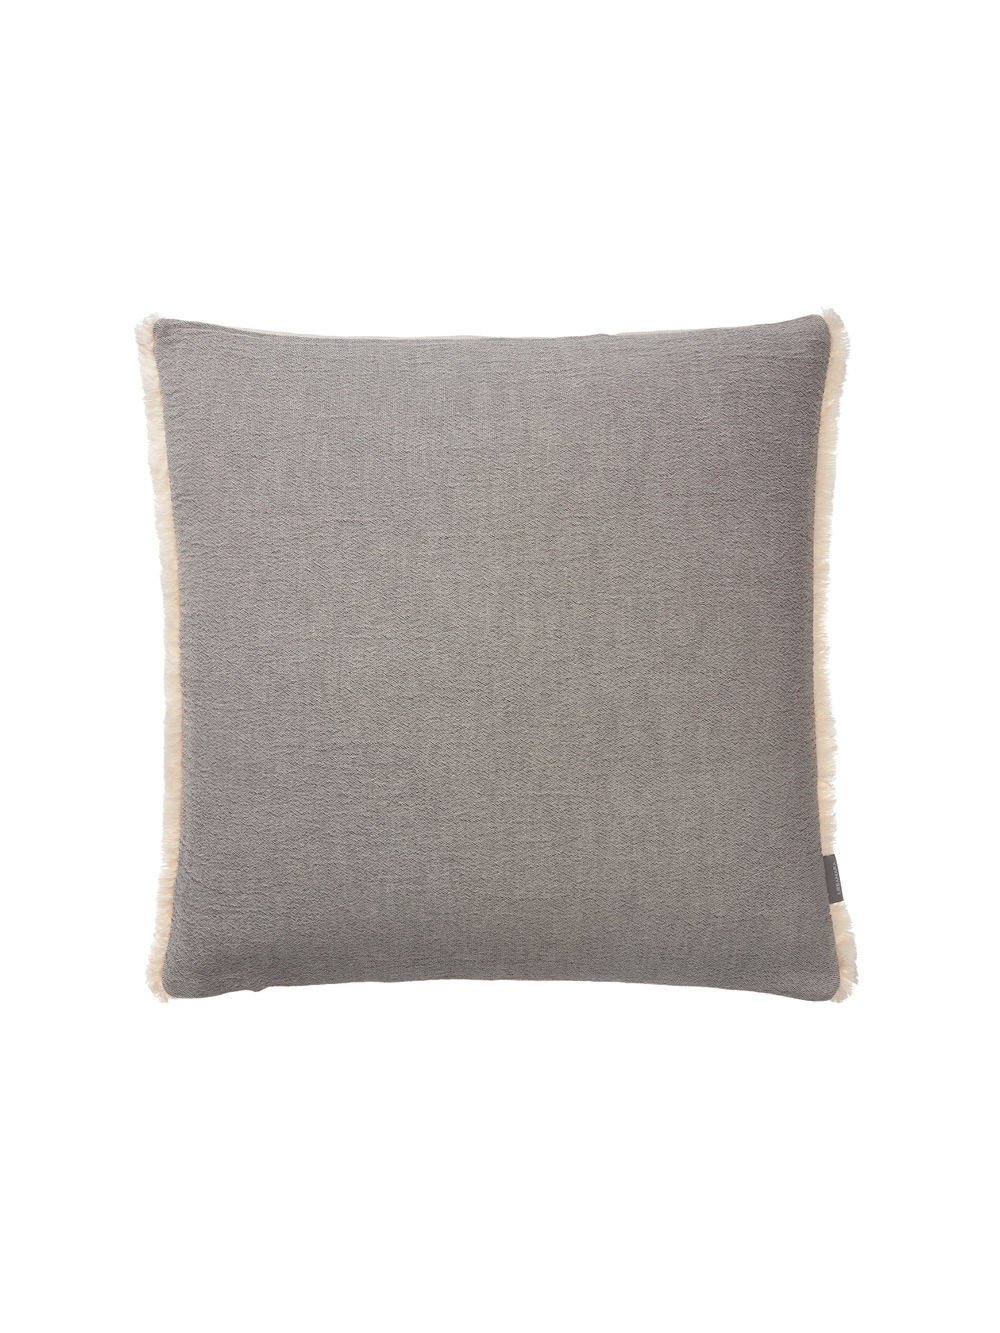 Anaba Scatter Throw Cushion Pillow, Urbanara - Grey Beige Natural